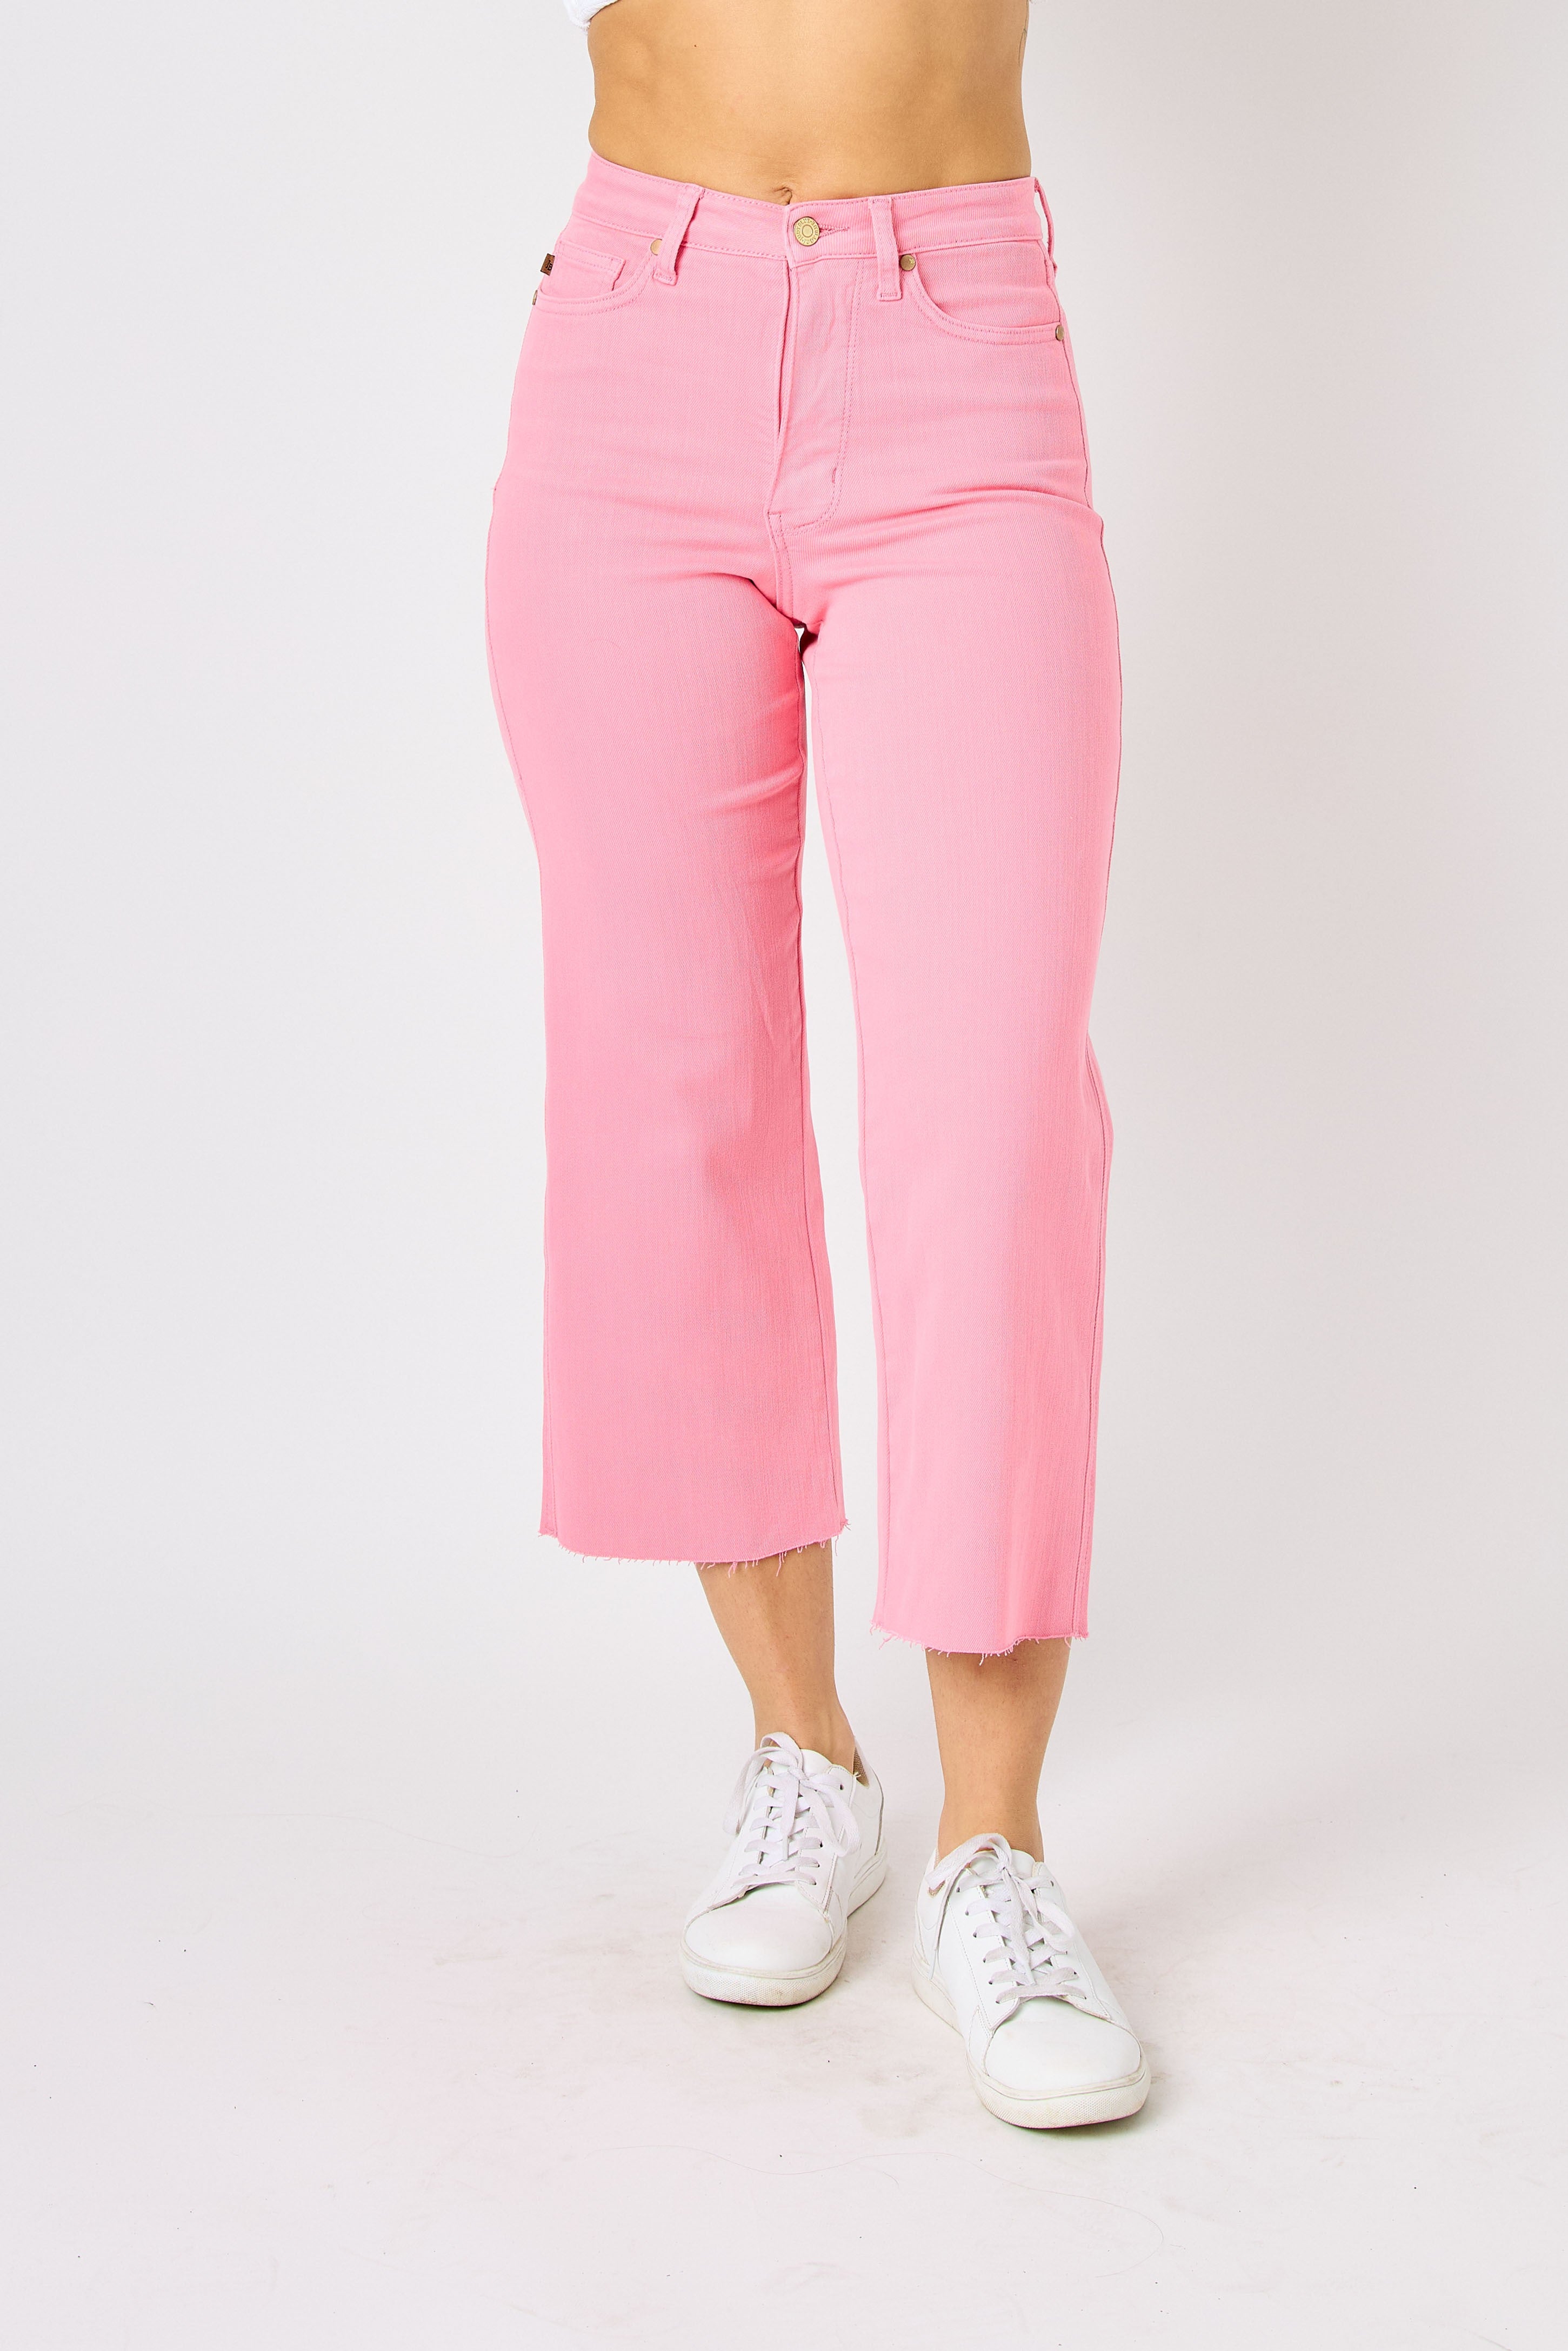 Pink High Waist Tummy Control Jeans